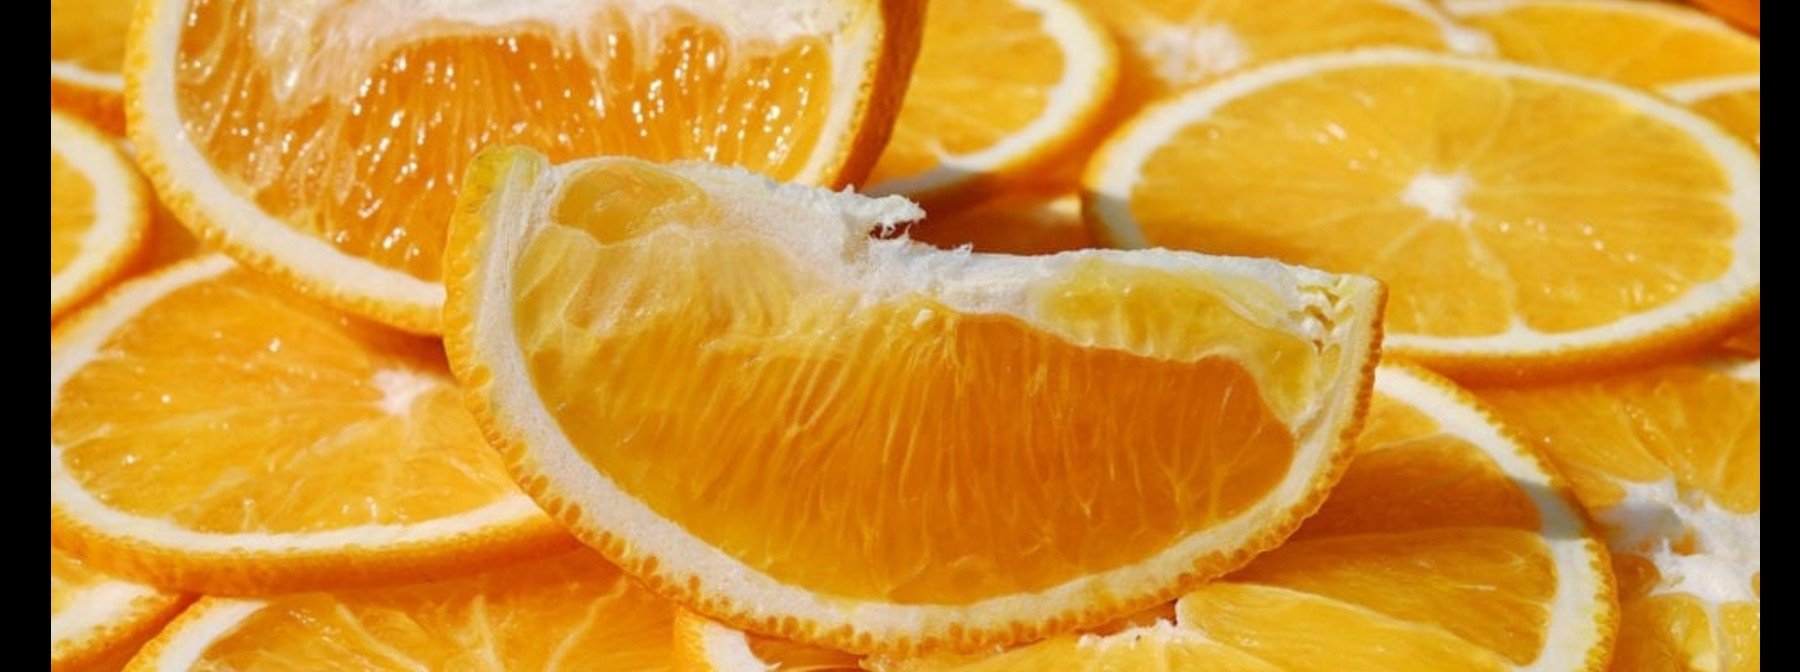 Vitamin C | What is it? Benefits? Deficiency Symptoms? Sources?